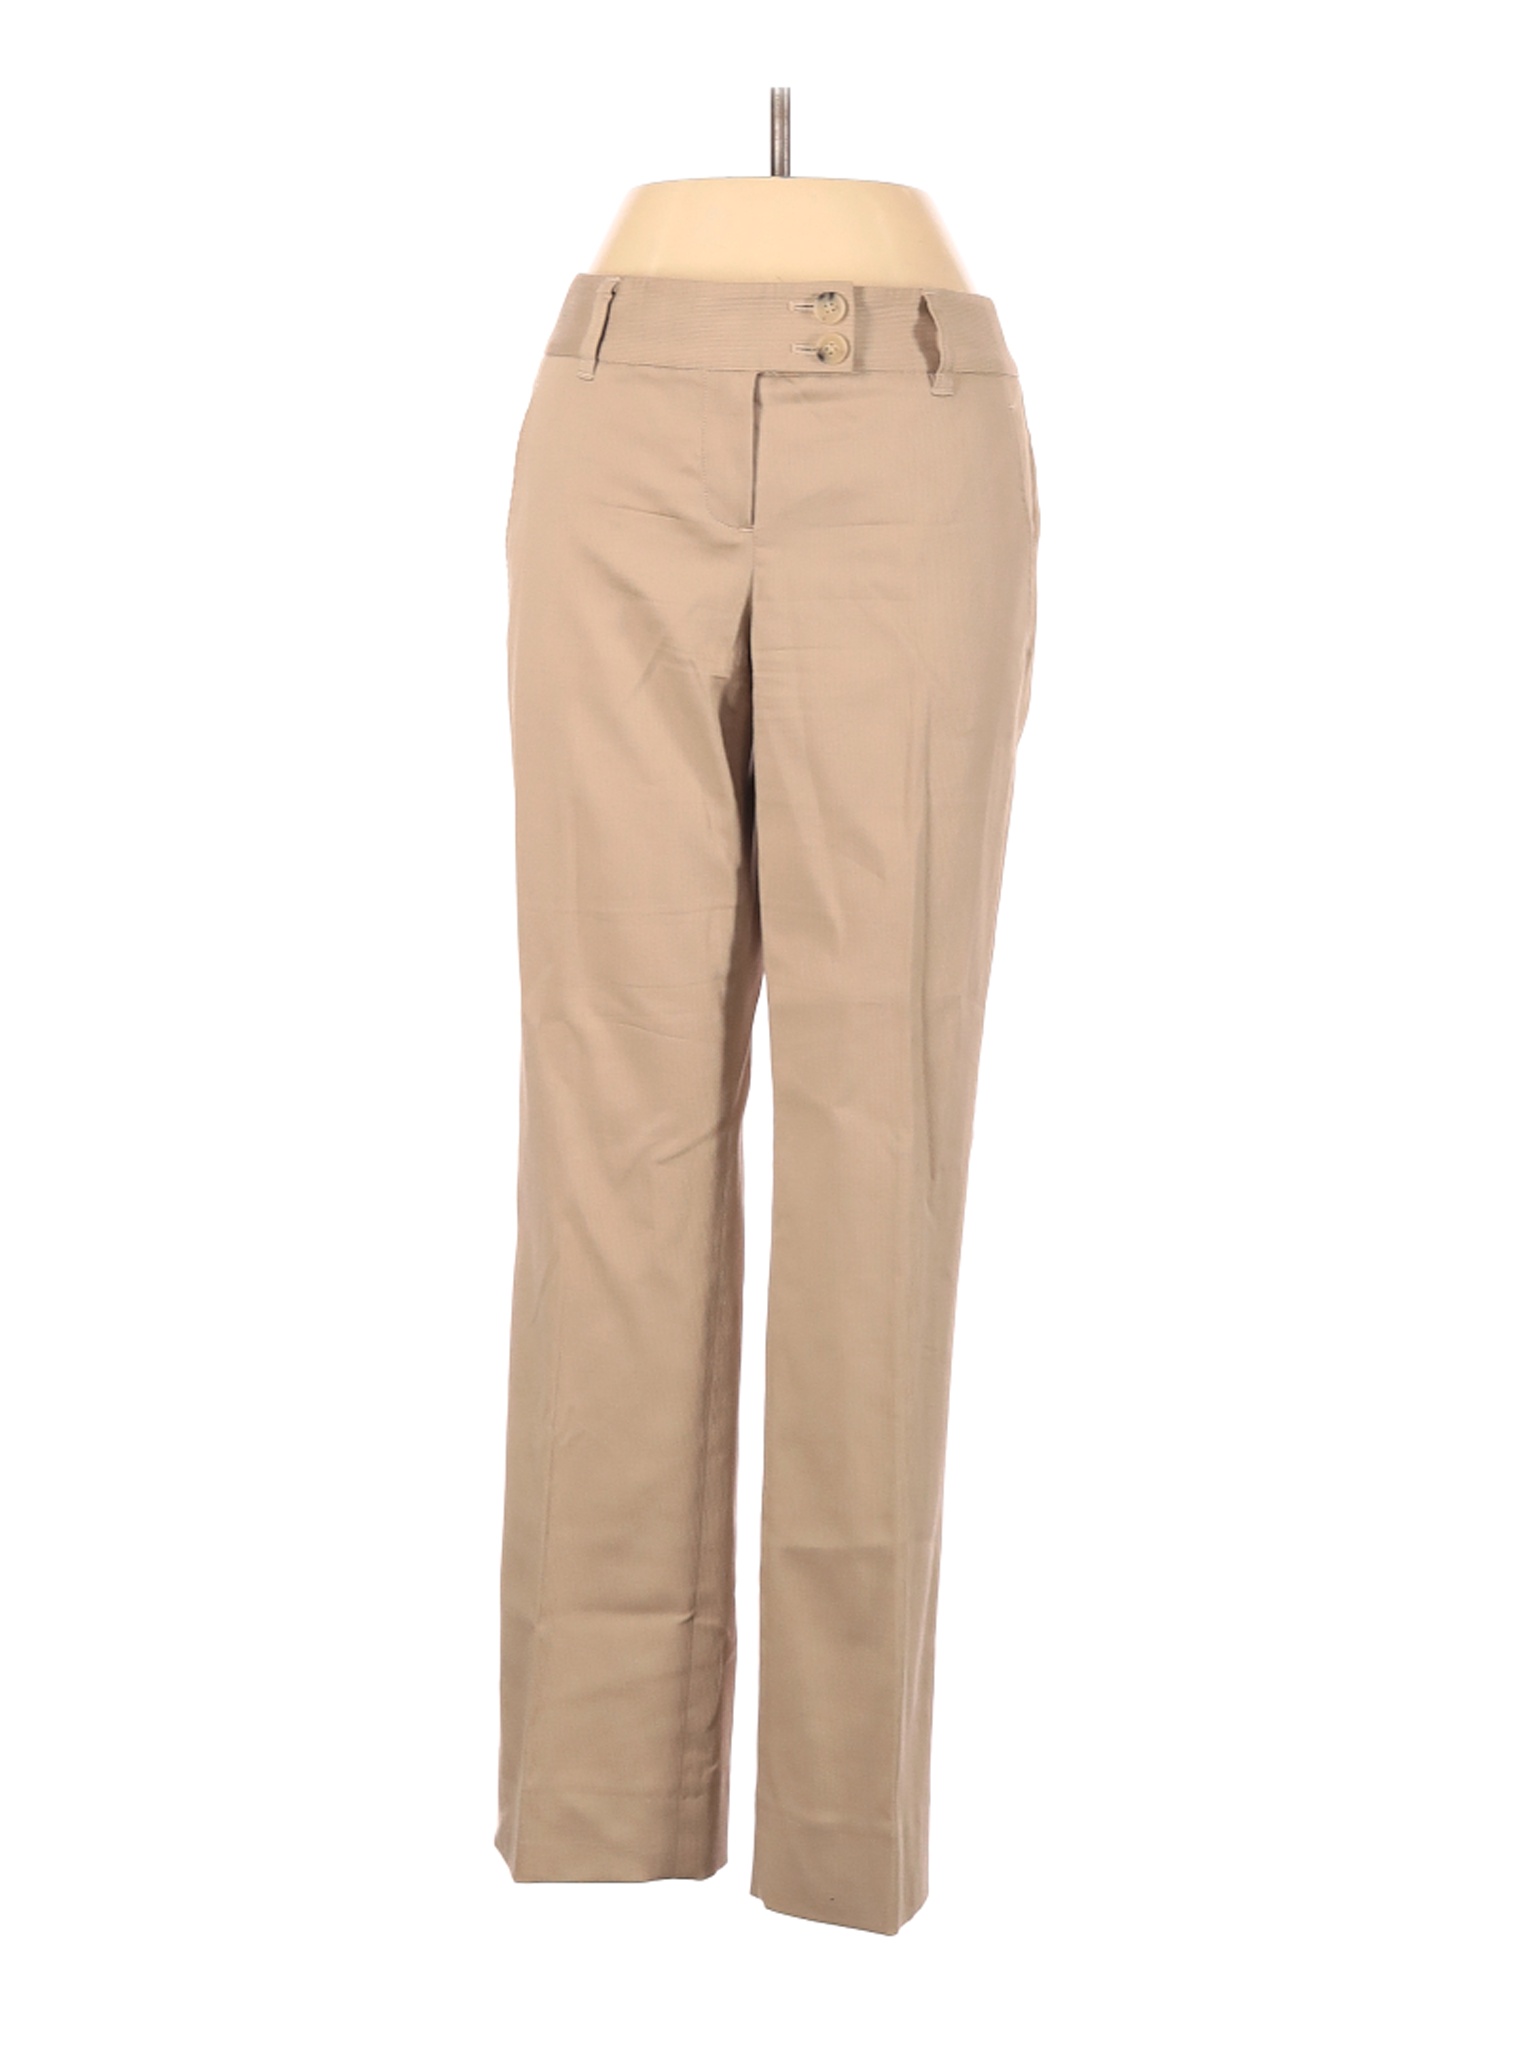 Theory Women Brown Dress Pants 4 | eBay